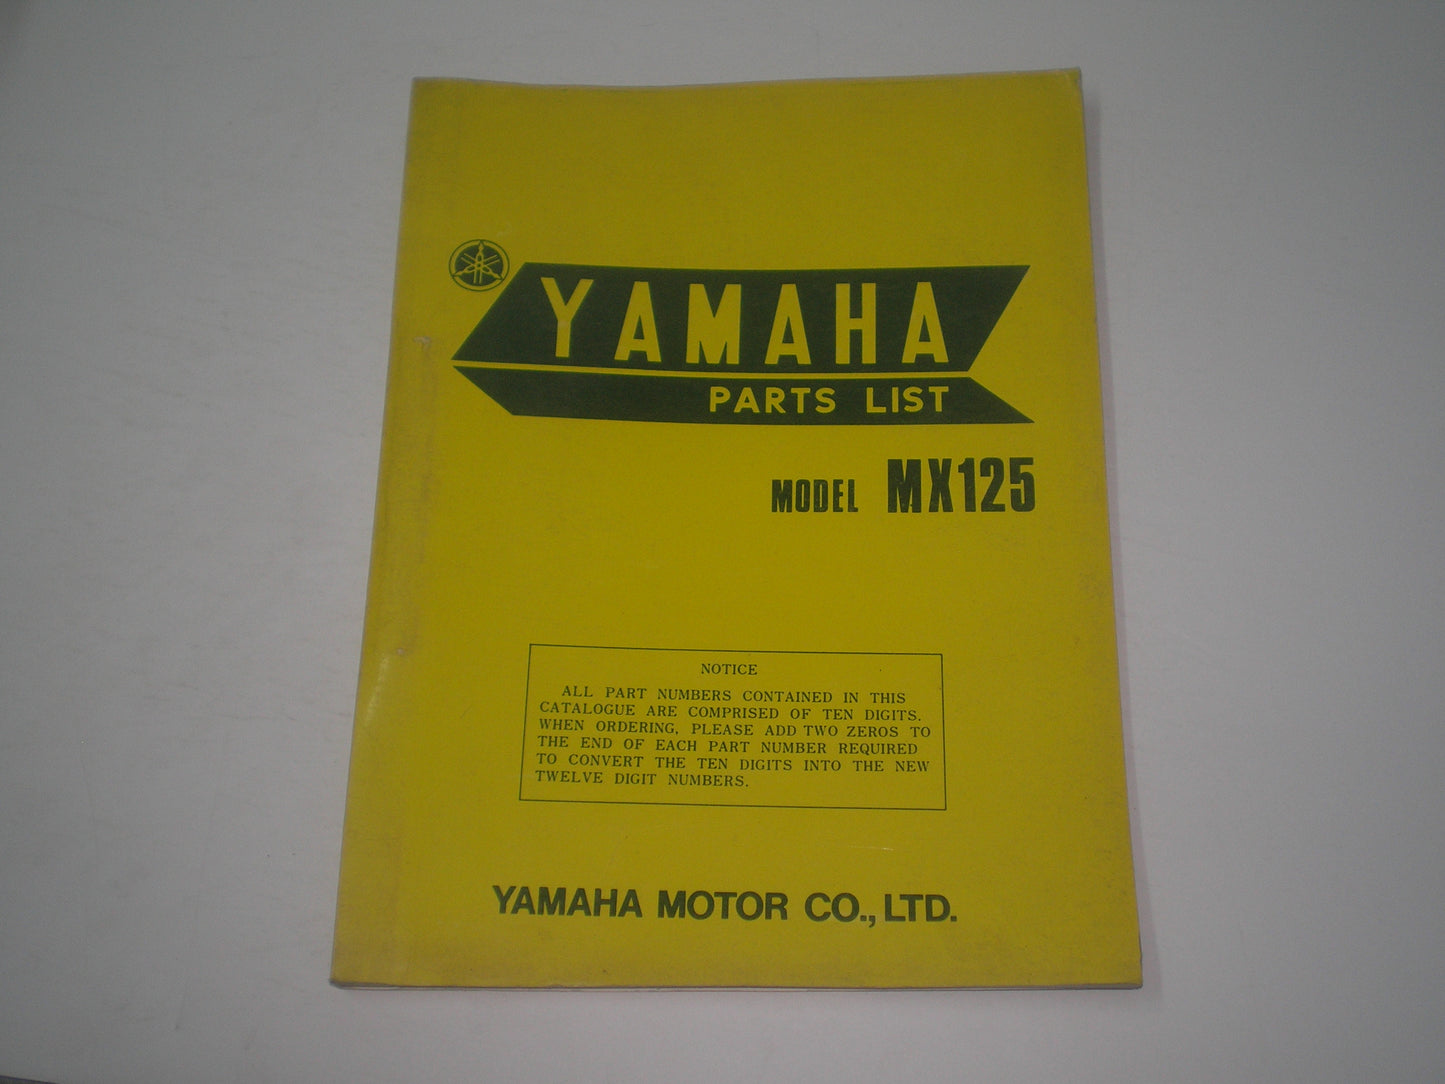 YAMAHA MX125 1974 Parts List / Catalogue  402-28198-60  LIT-10014-02-00  #1739